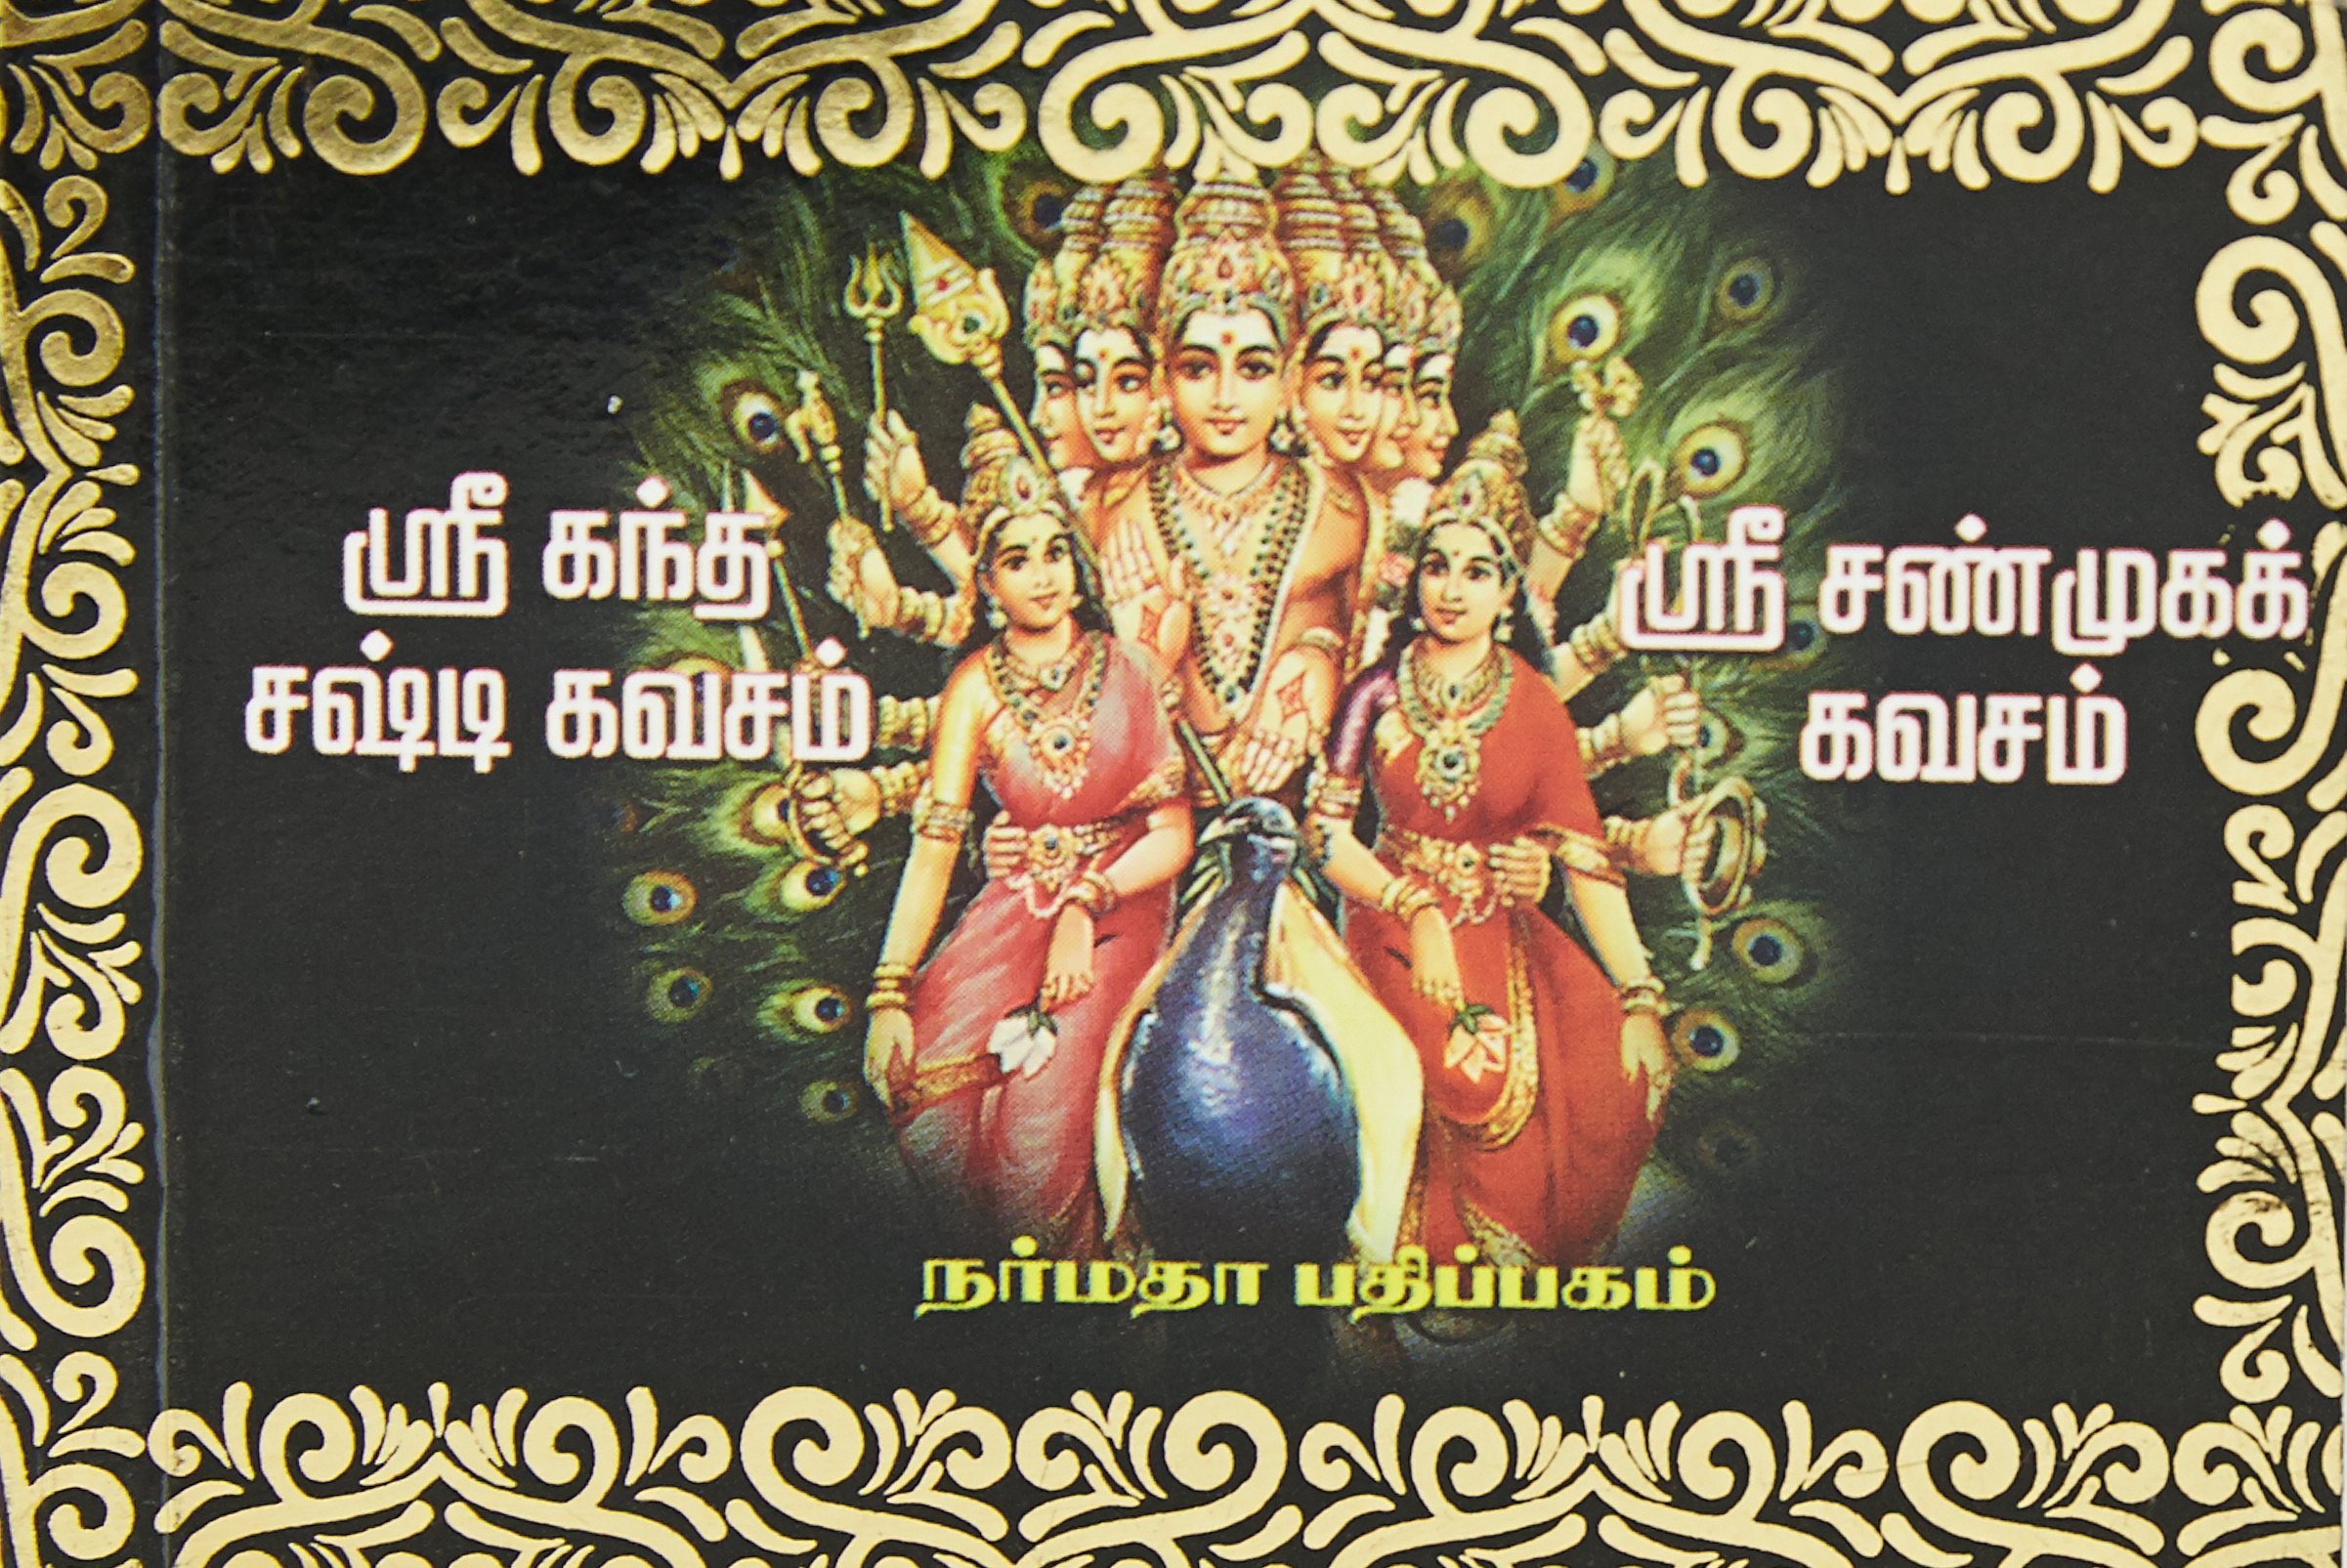 kandha sasti kavasam lyrics in tamil mp3 download